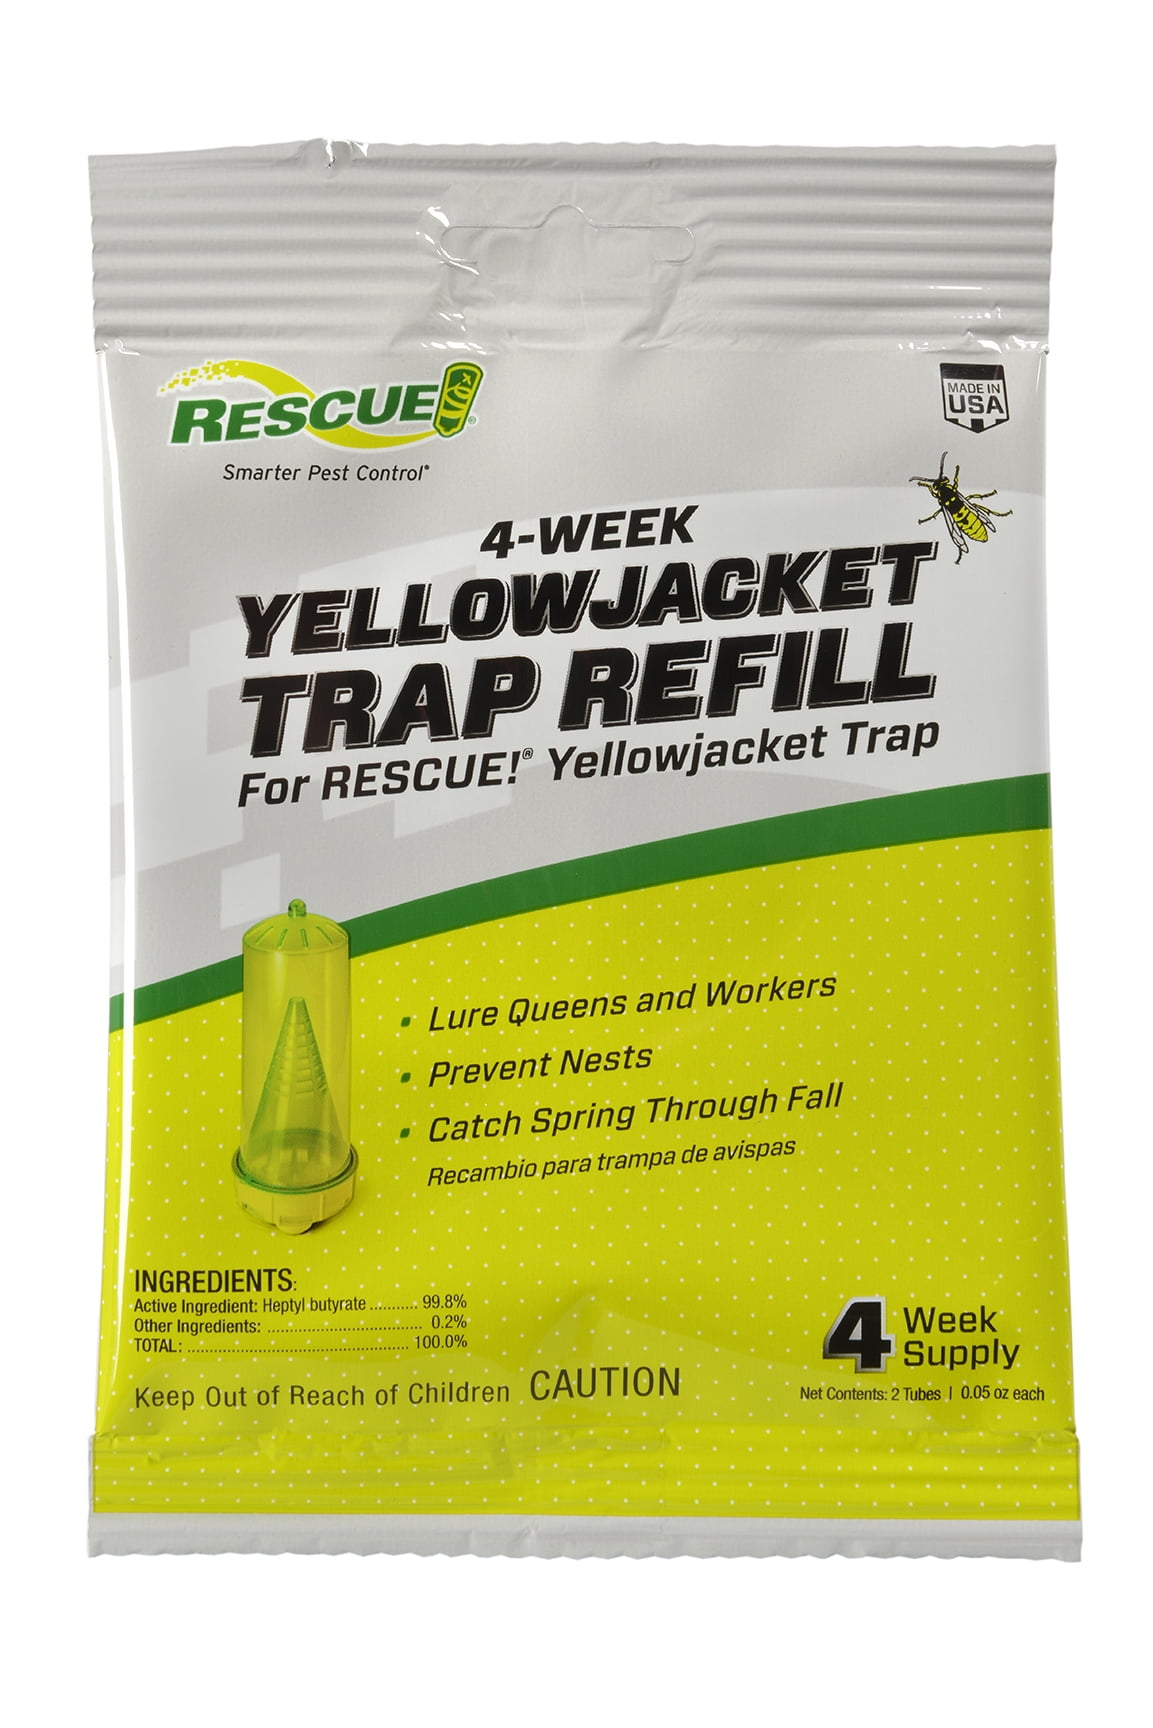 3 Ways to Manage Yellowjackets Without Chemicals - Northwest